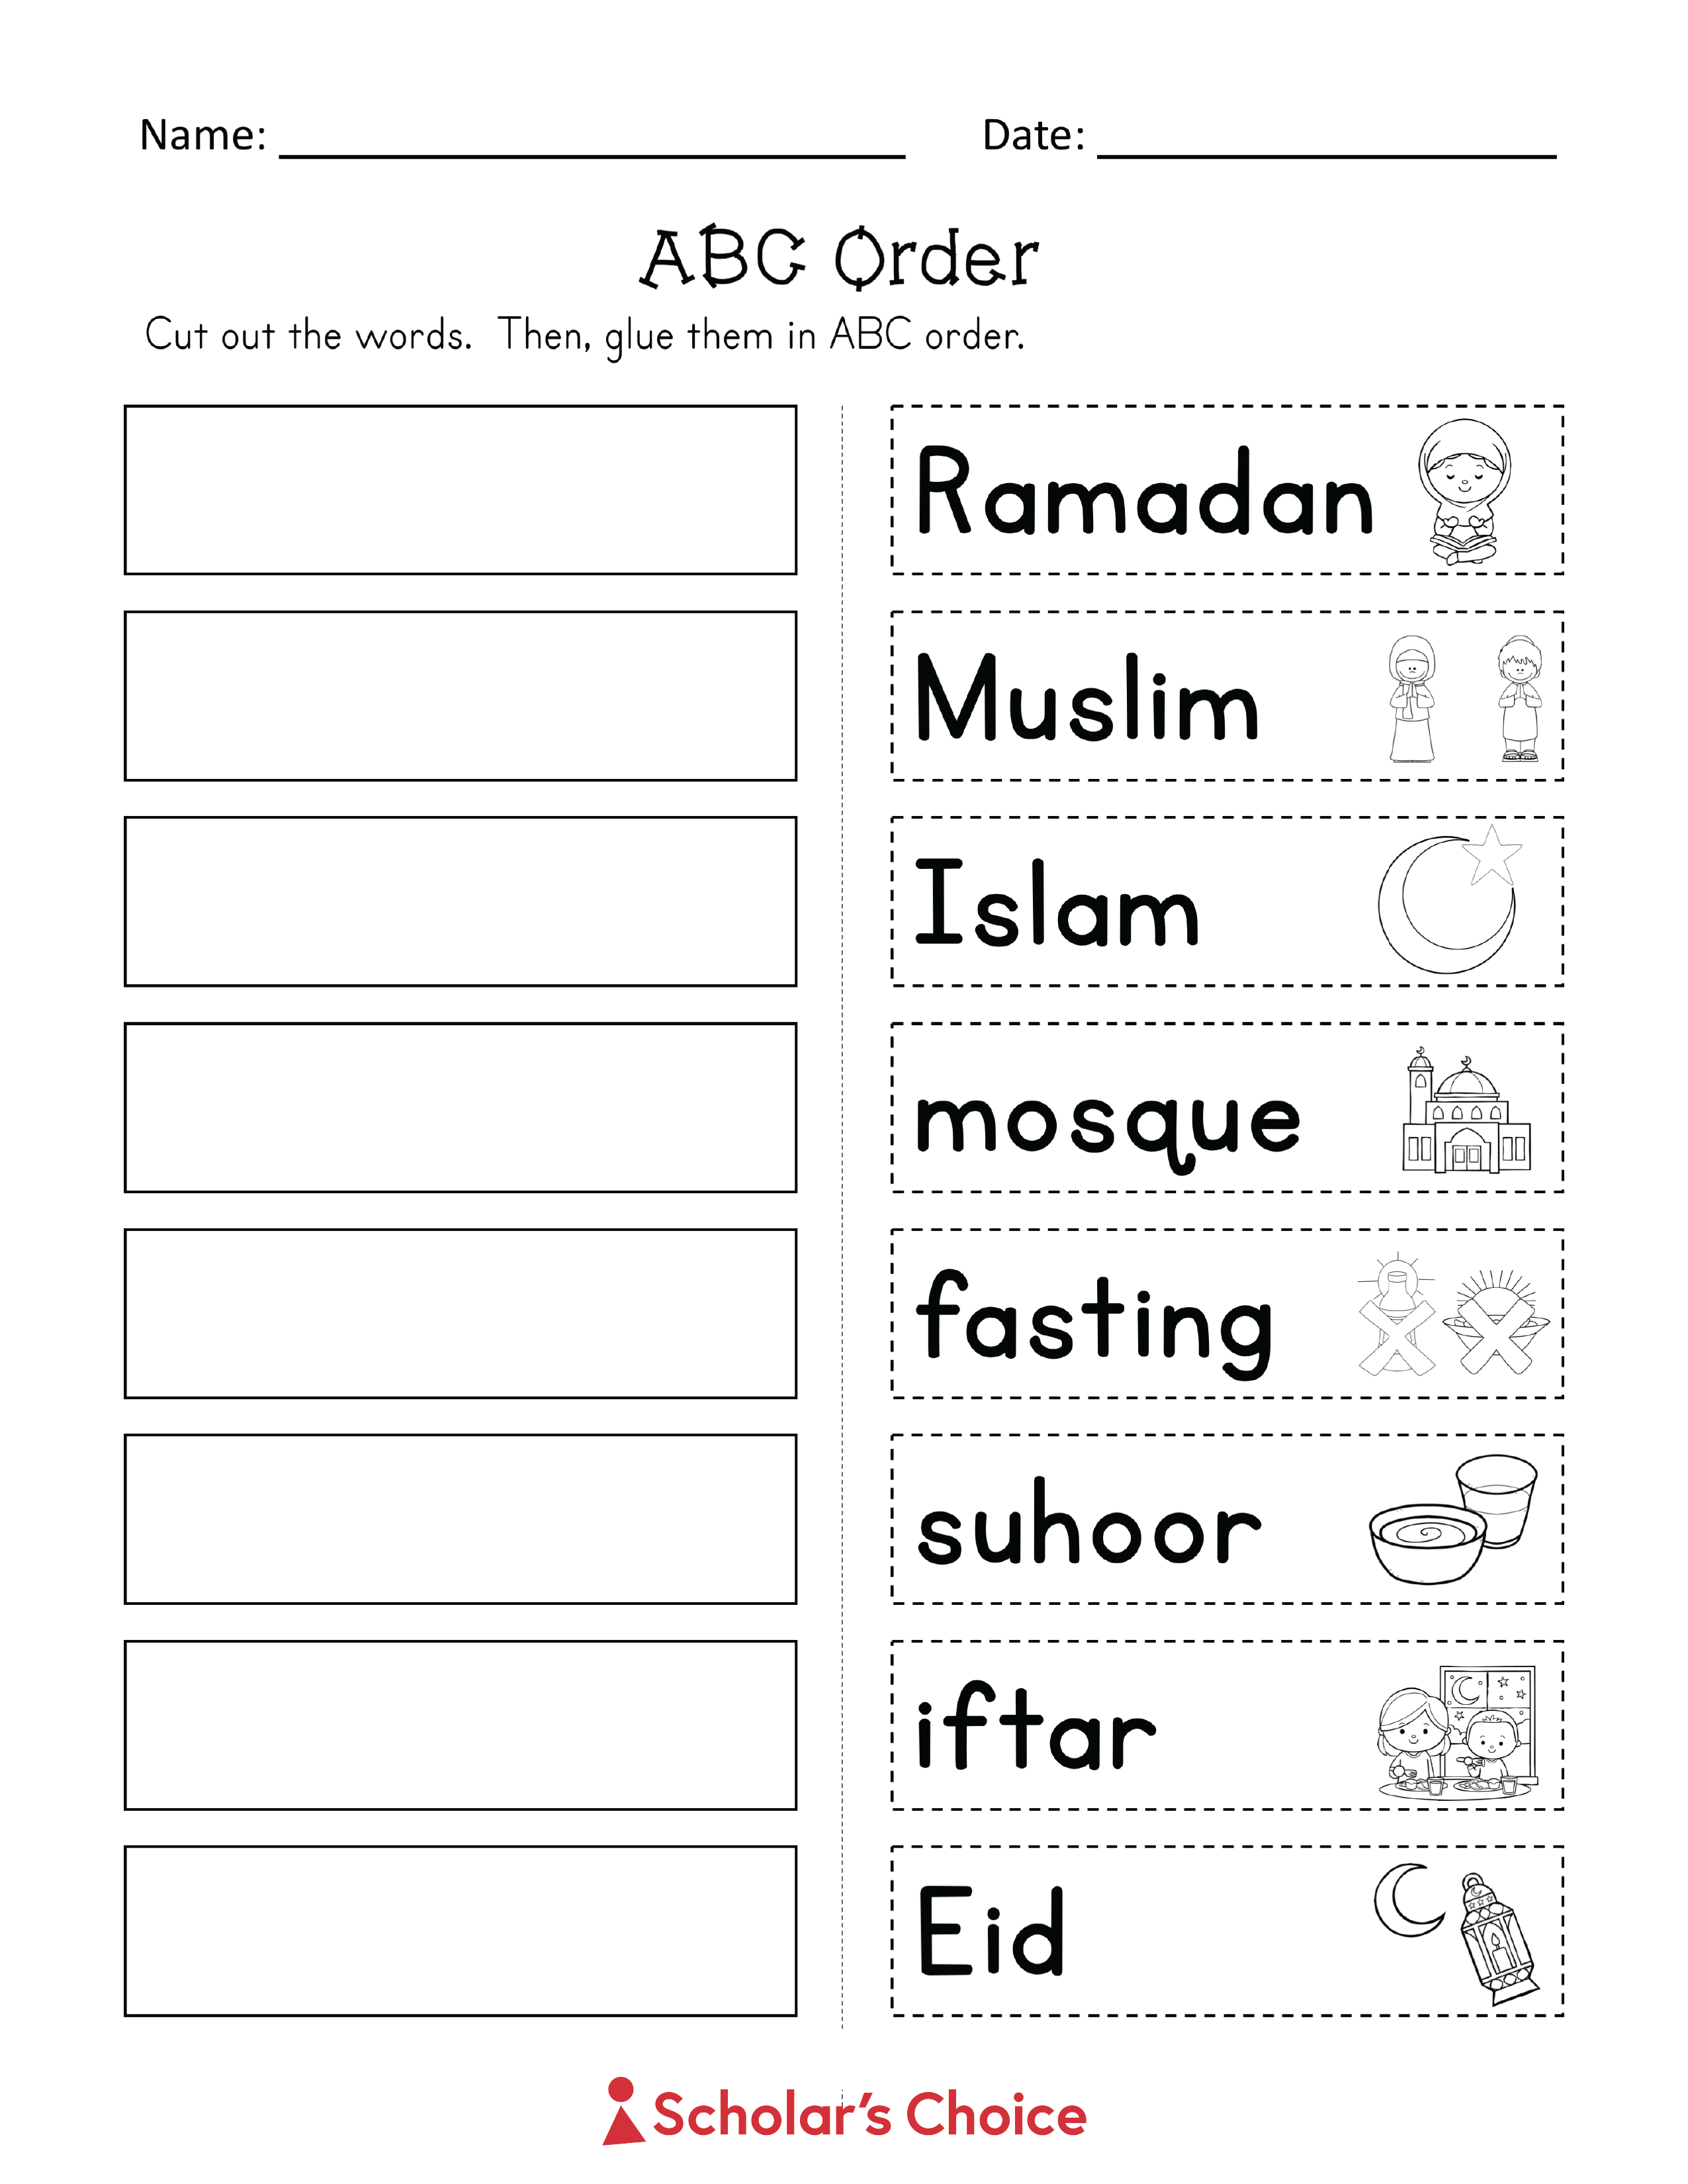 ramadan_word_order